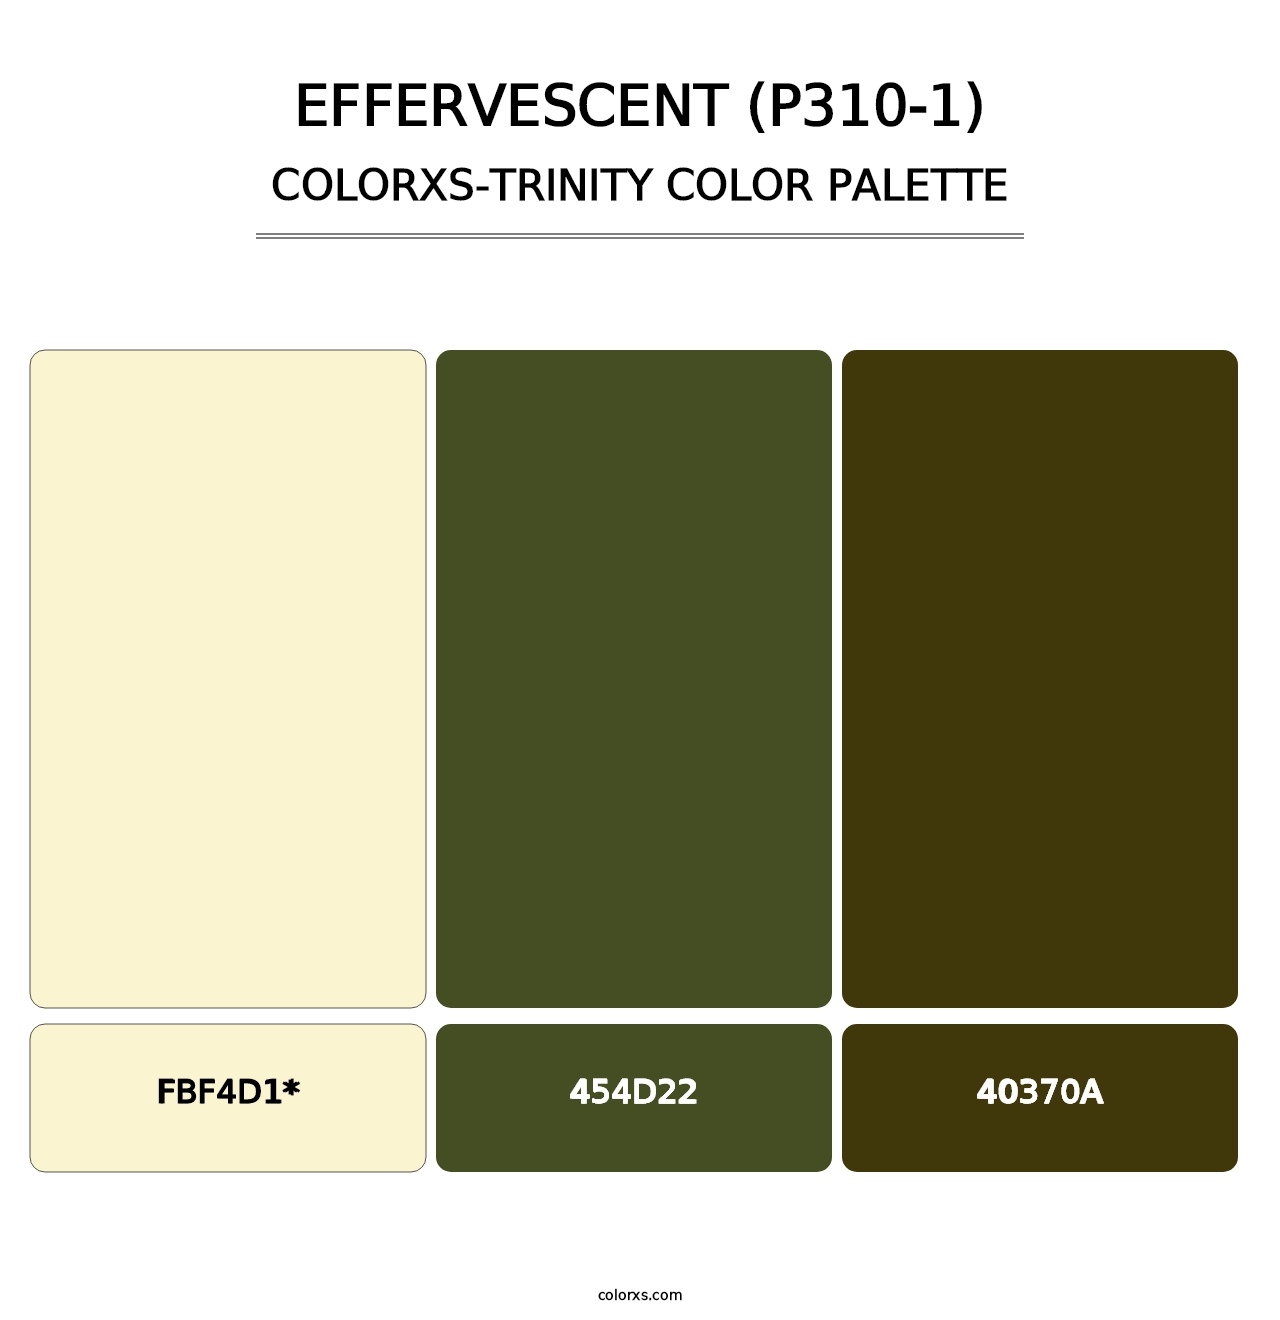 Effervescent (P310-1) - Colorxs Trinity Palette